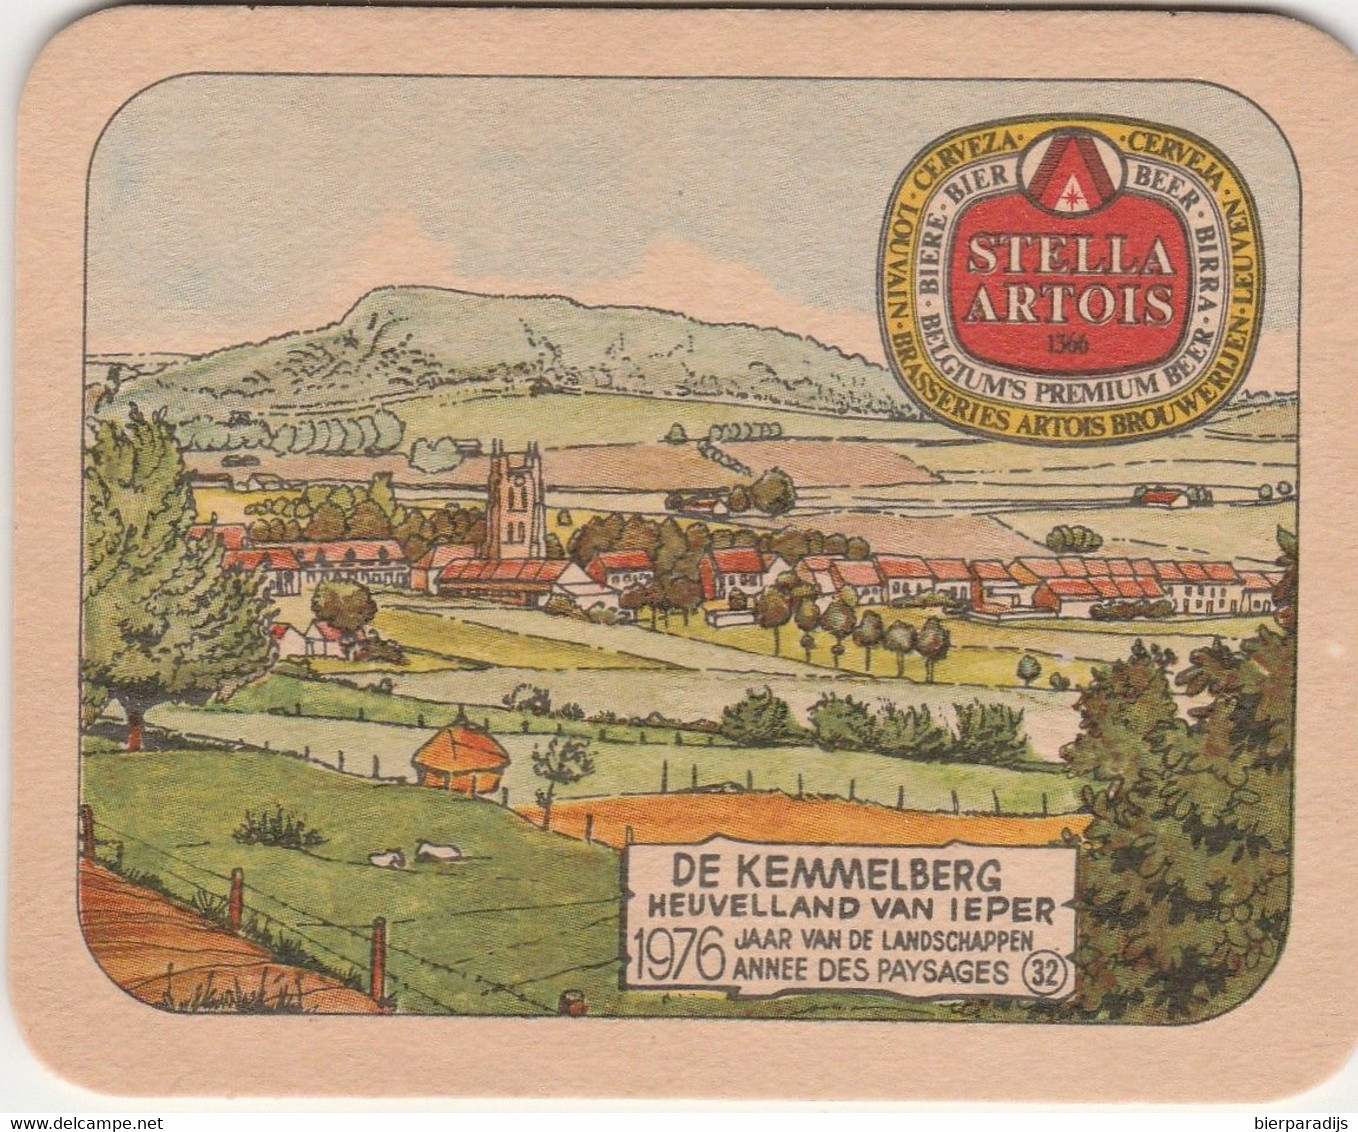 Stella  Artois -  1976   Landschappen  32   Kemmelberg - Ieper - Beer Mats